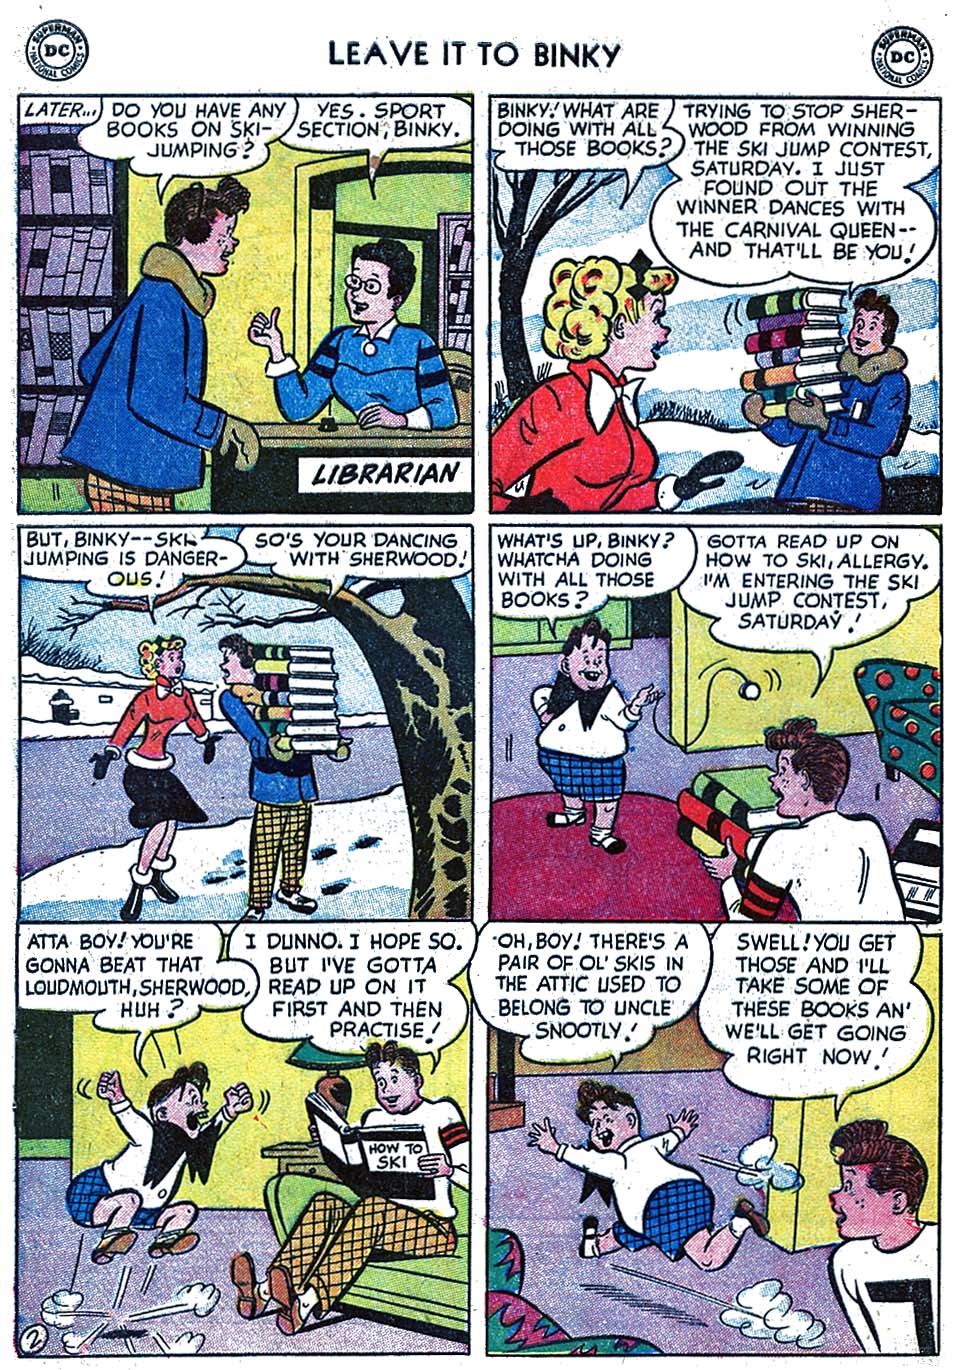 Read online Leave it to Binky comic -  Issue #37 - 4